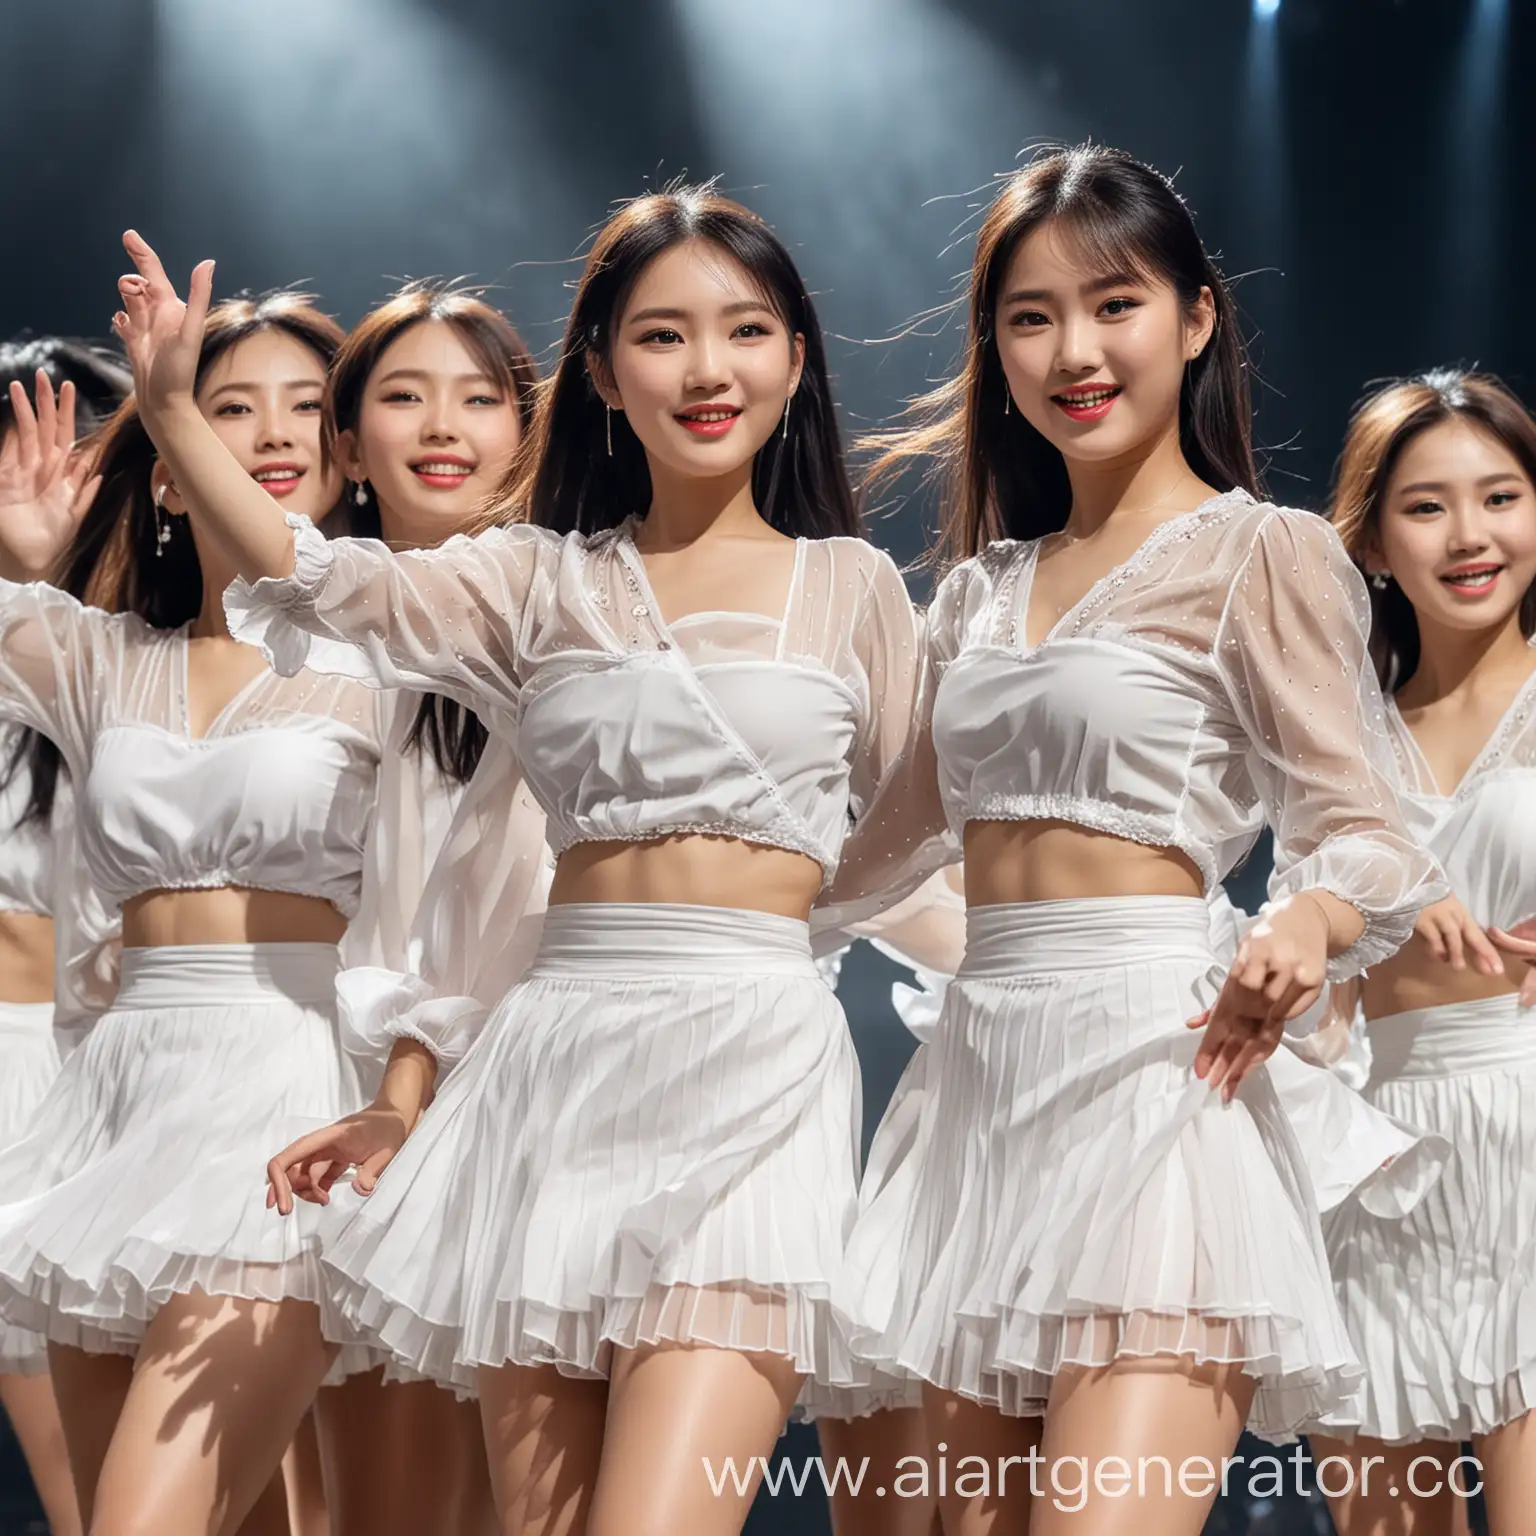 Elegant-Asian-Girls-Performing-Synchronized-Dance-in-White-Skirts-and-Black-Tops